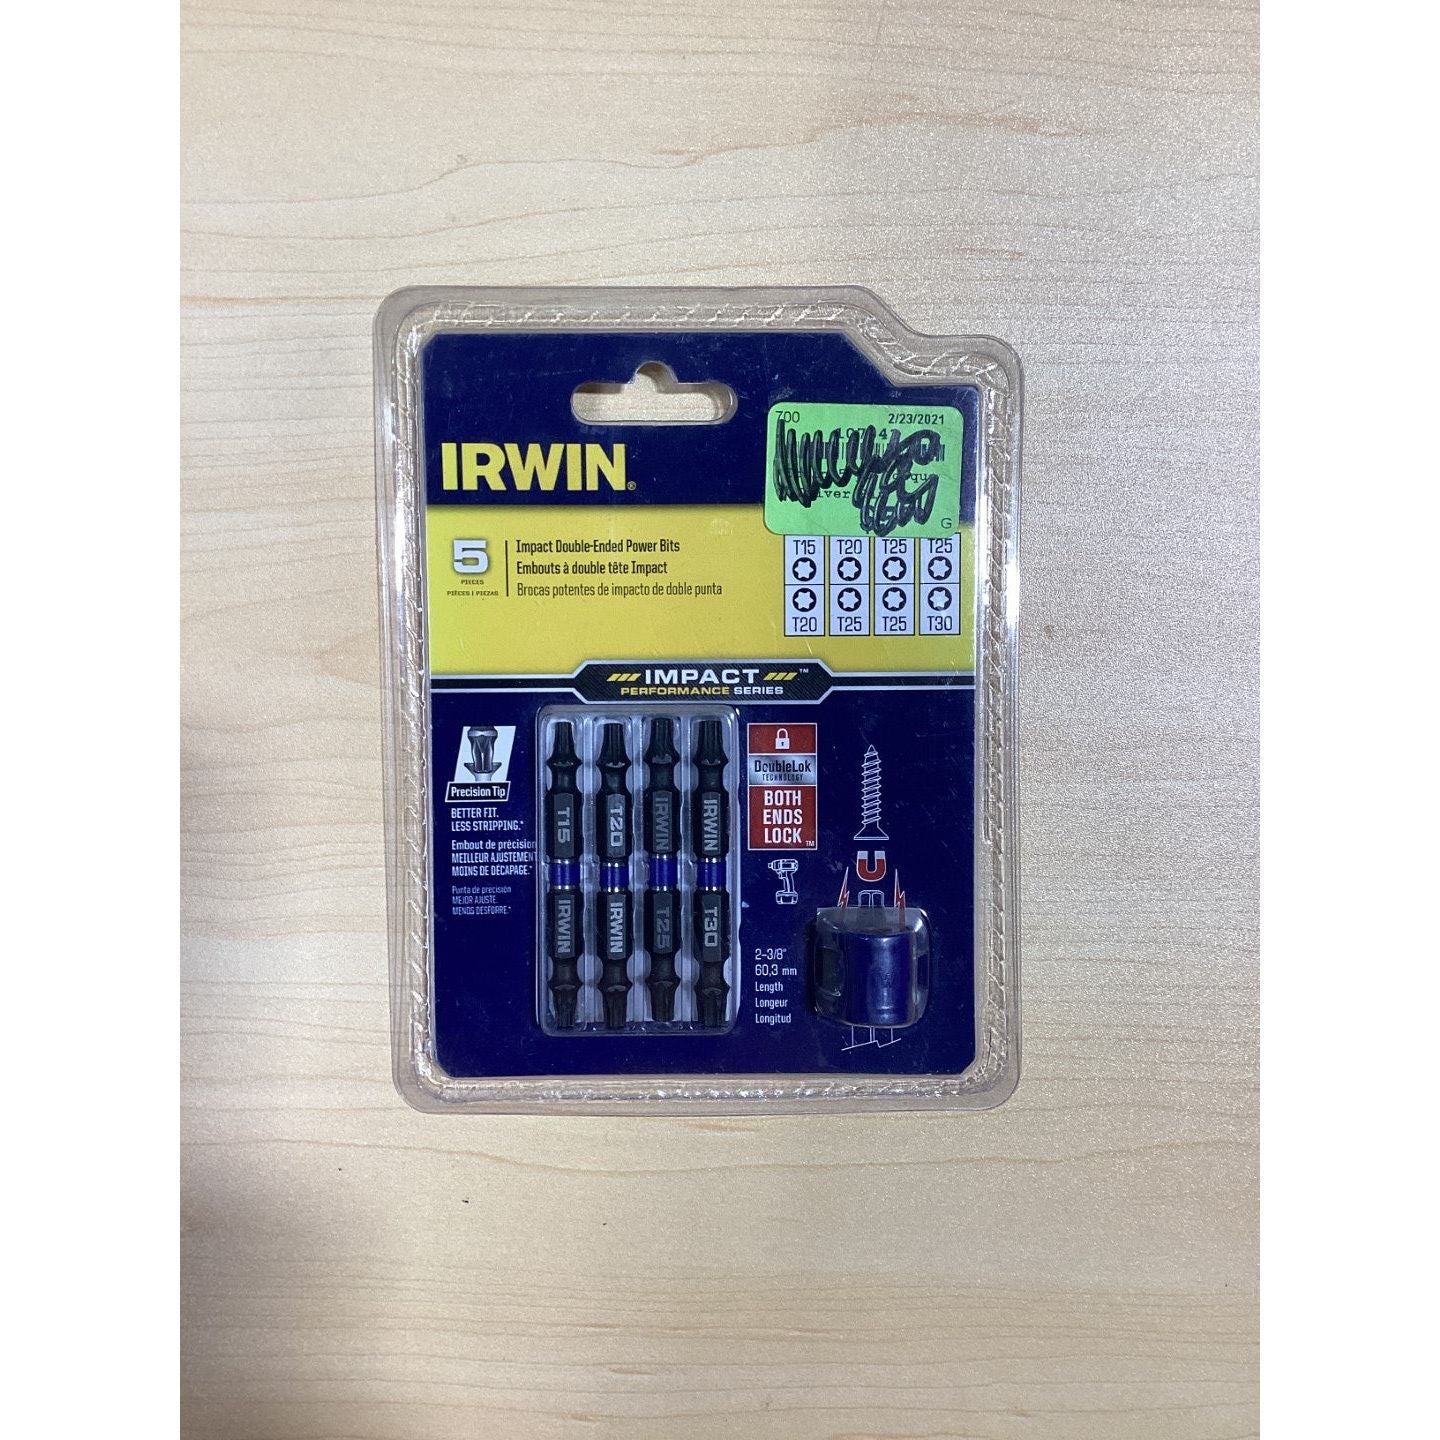 Irwin 5 piece Torque screwdriver power bits set